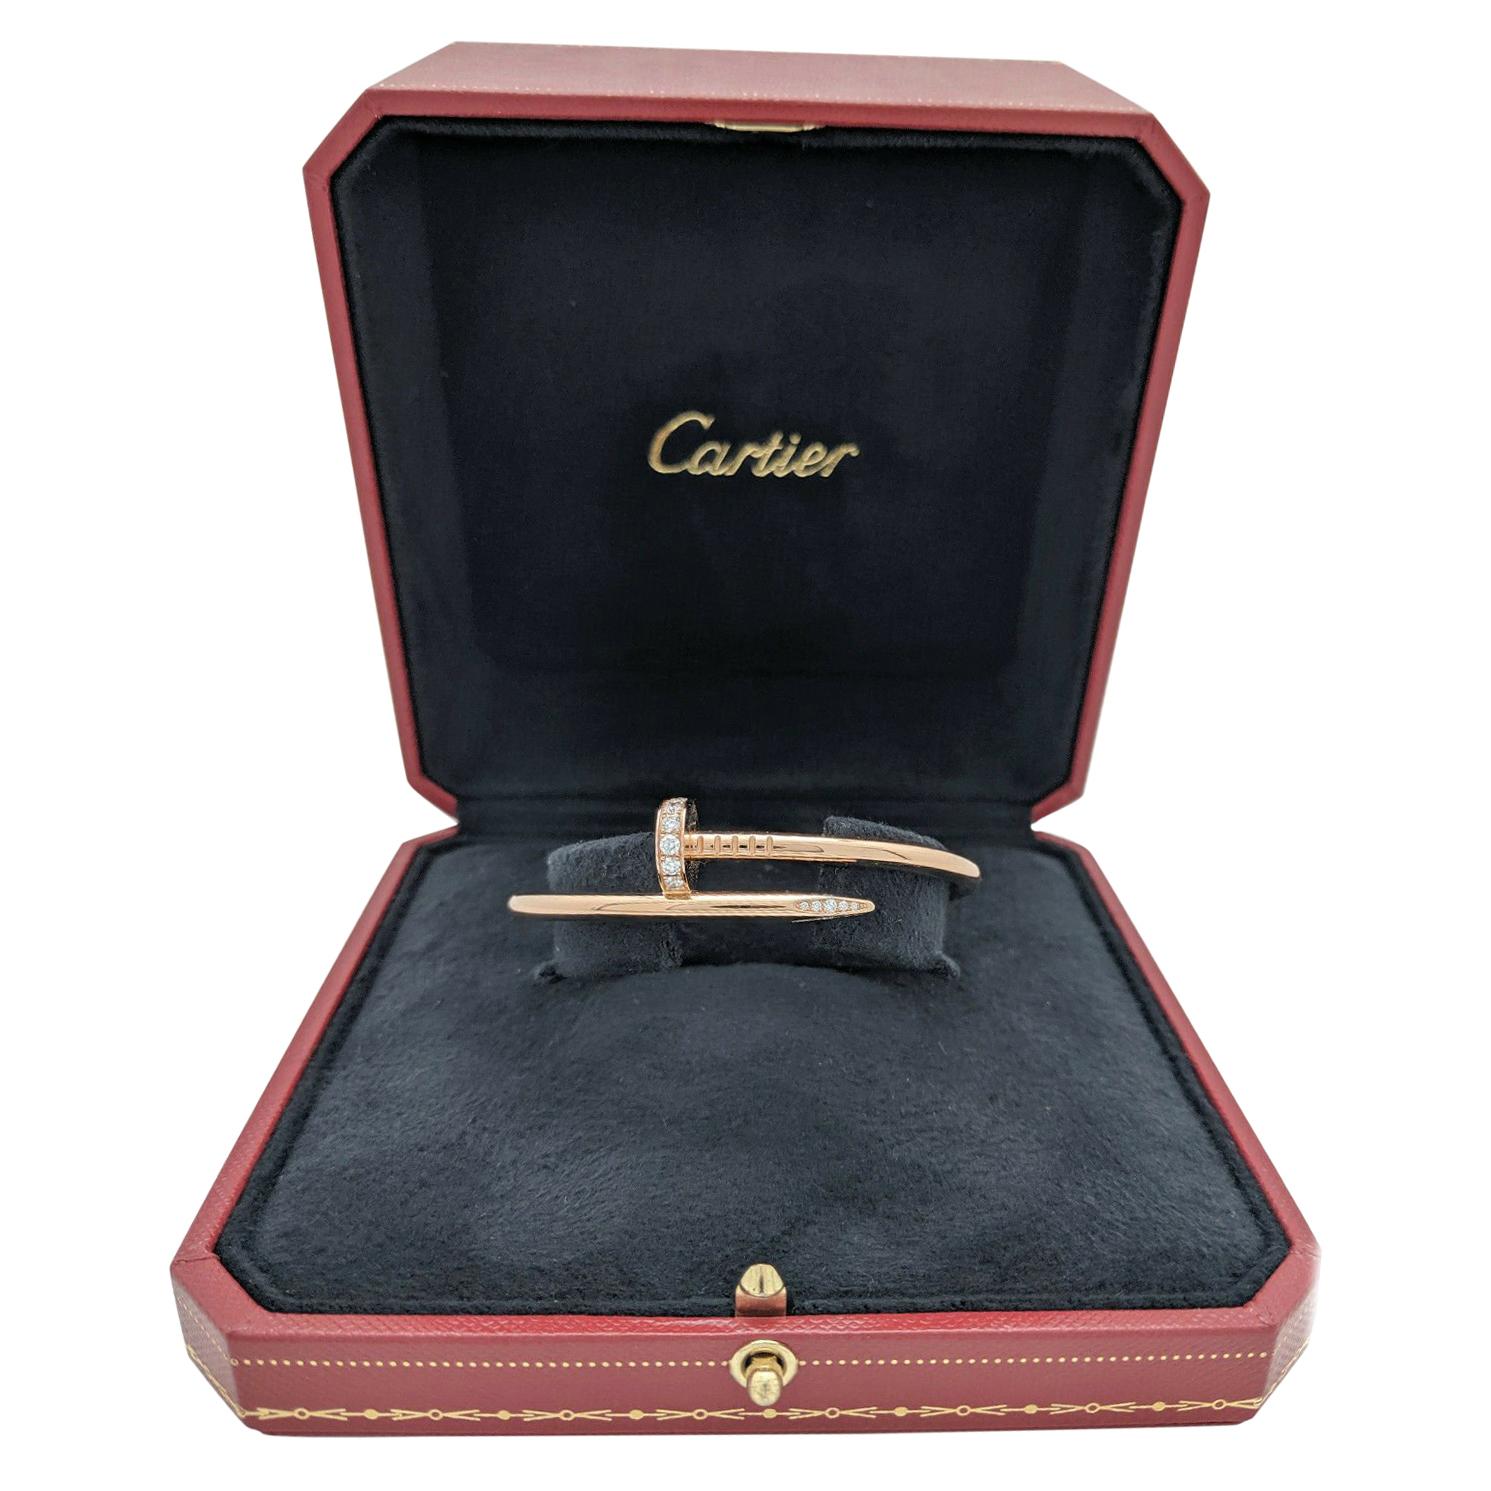 Cartier Juste un Clou Nail Bracelet with Diamonds 18 Karat Rose Gold Box, Papers